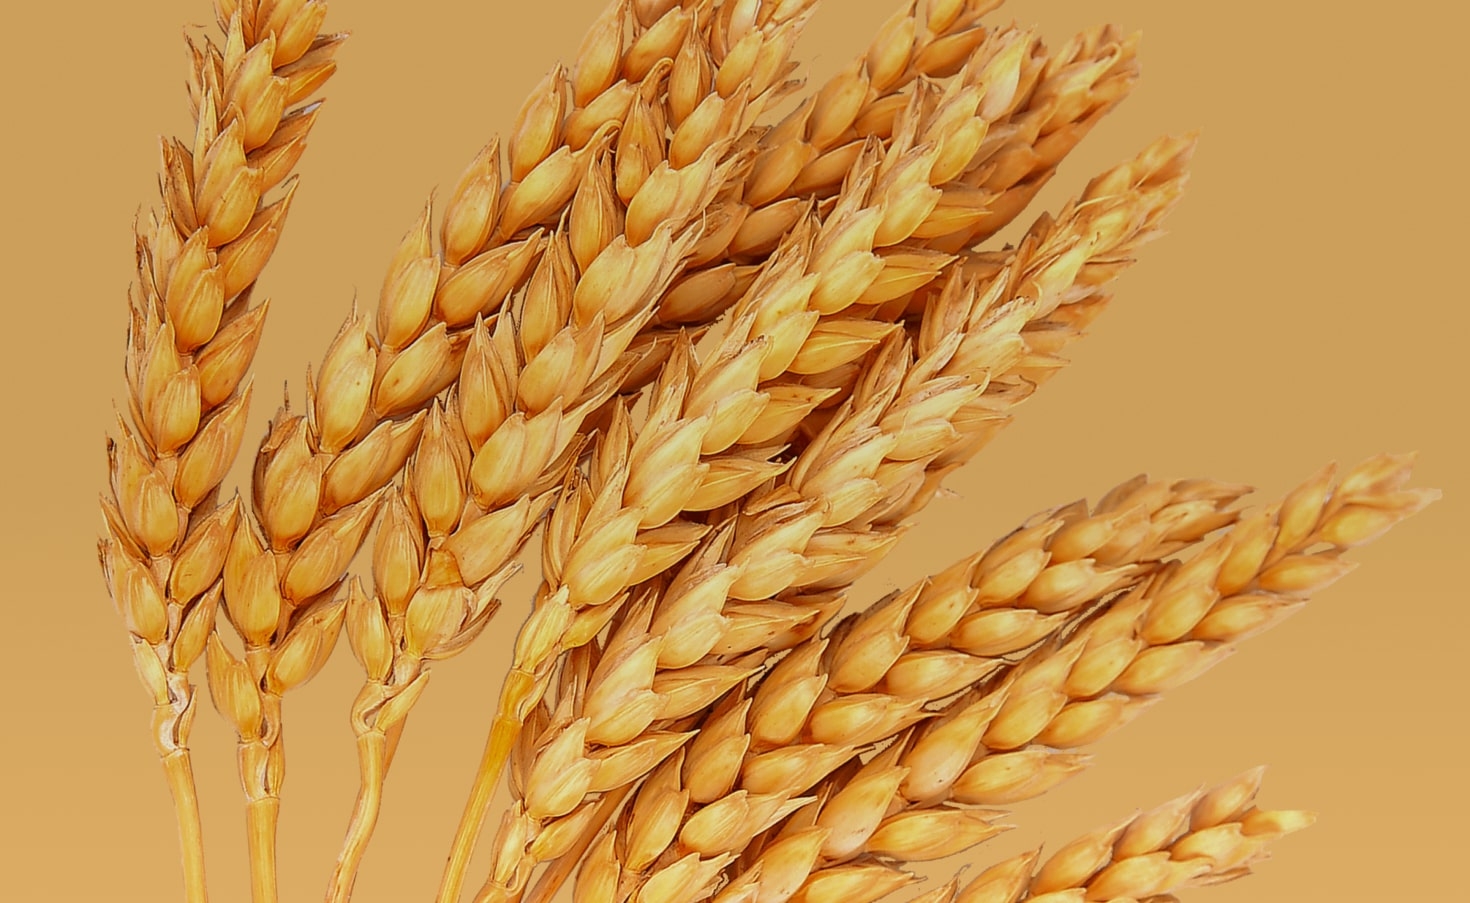 Uralchem agricultural products website project image